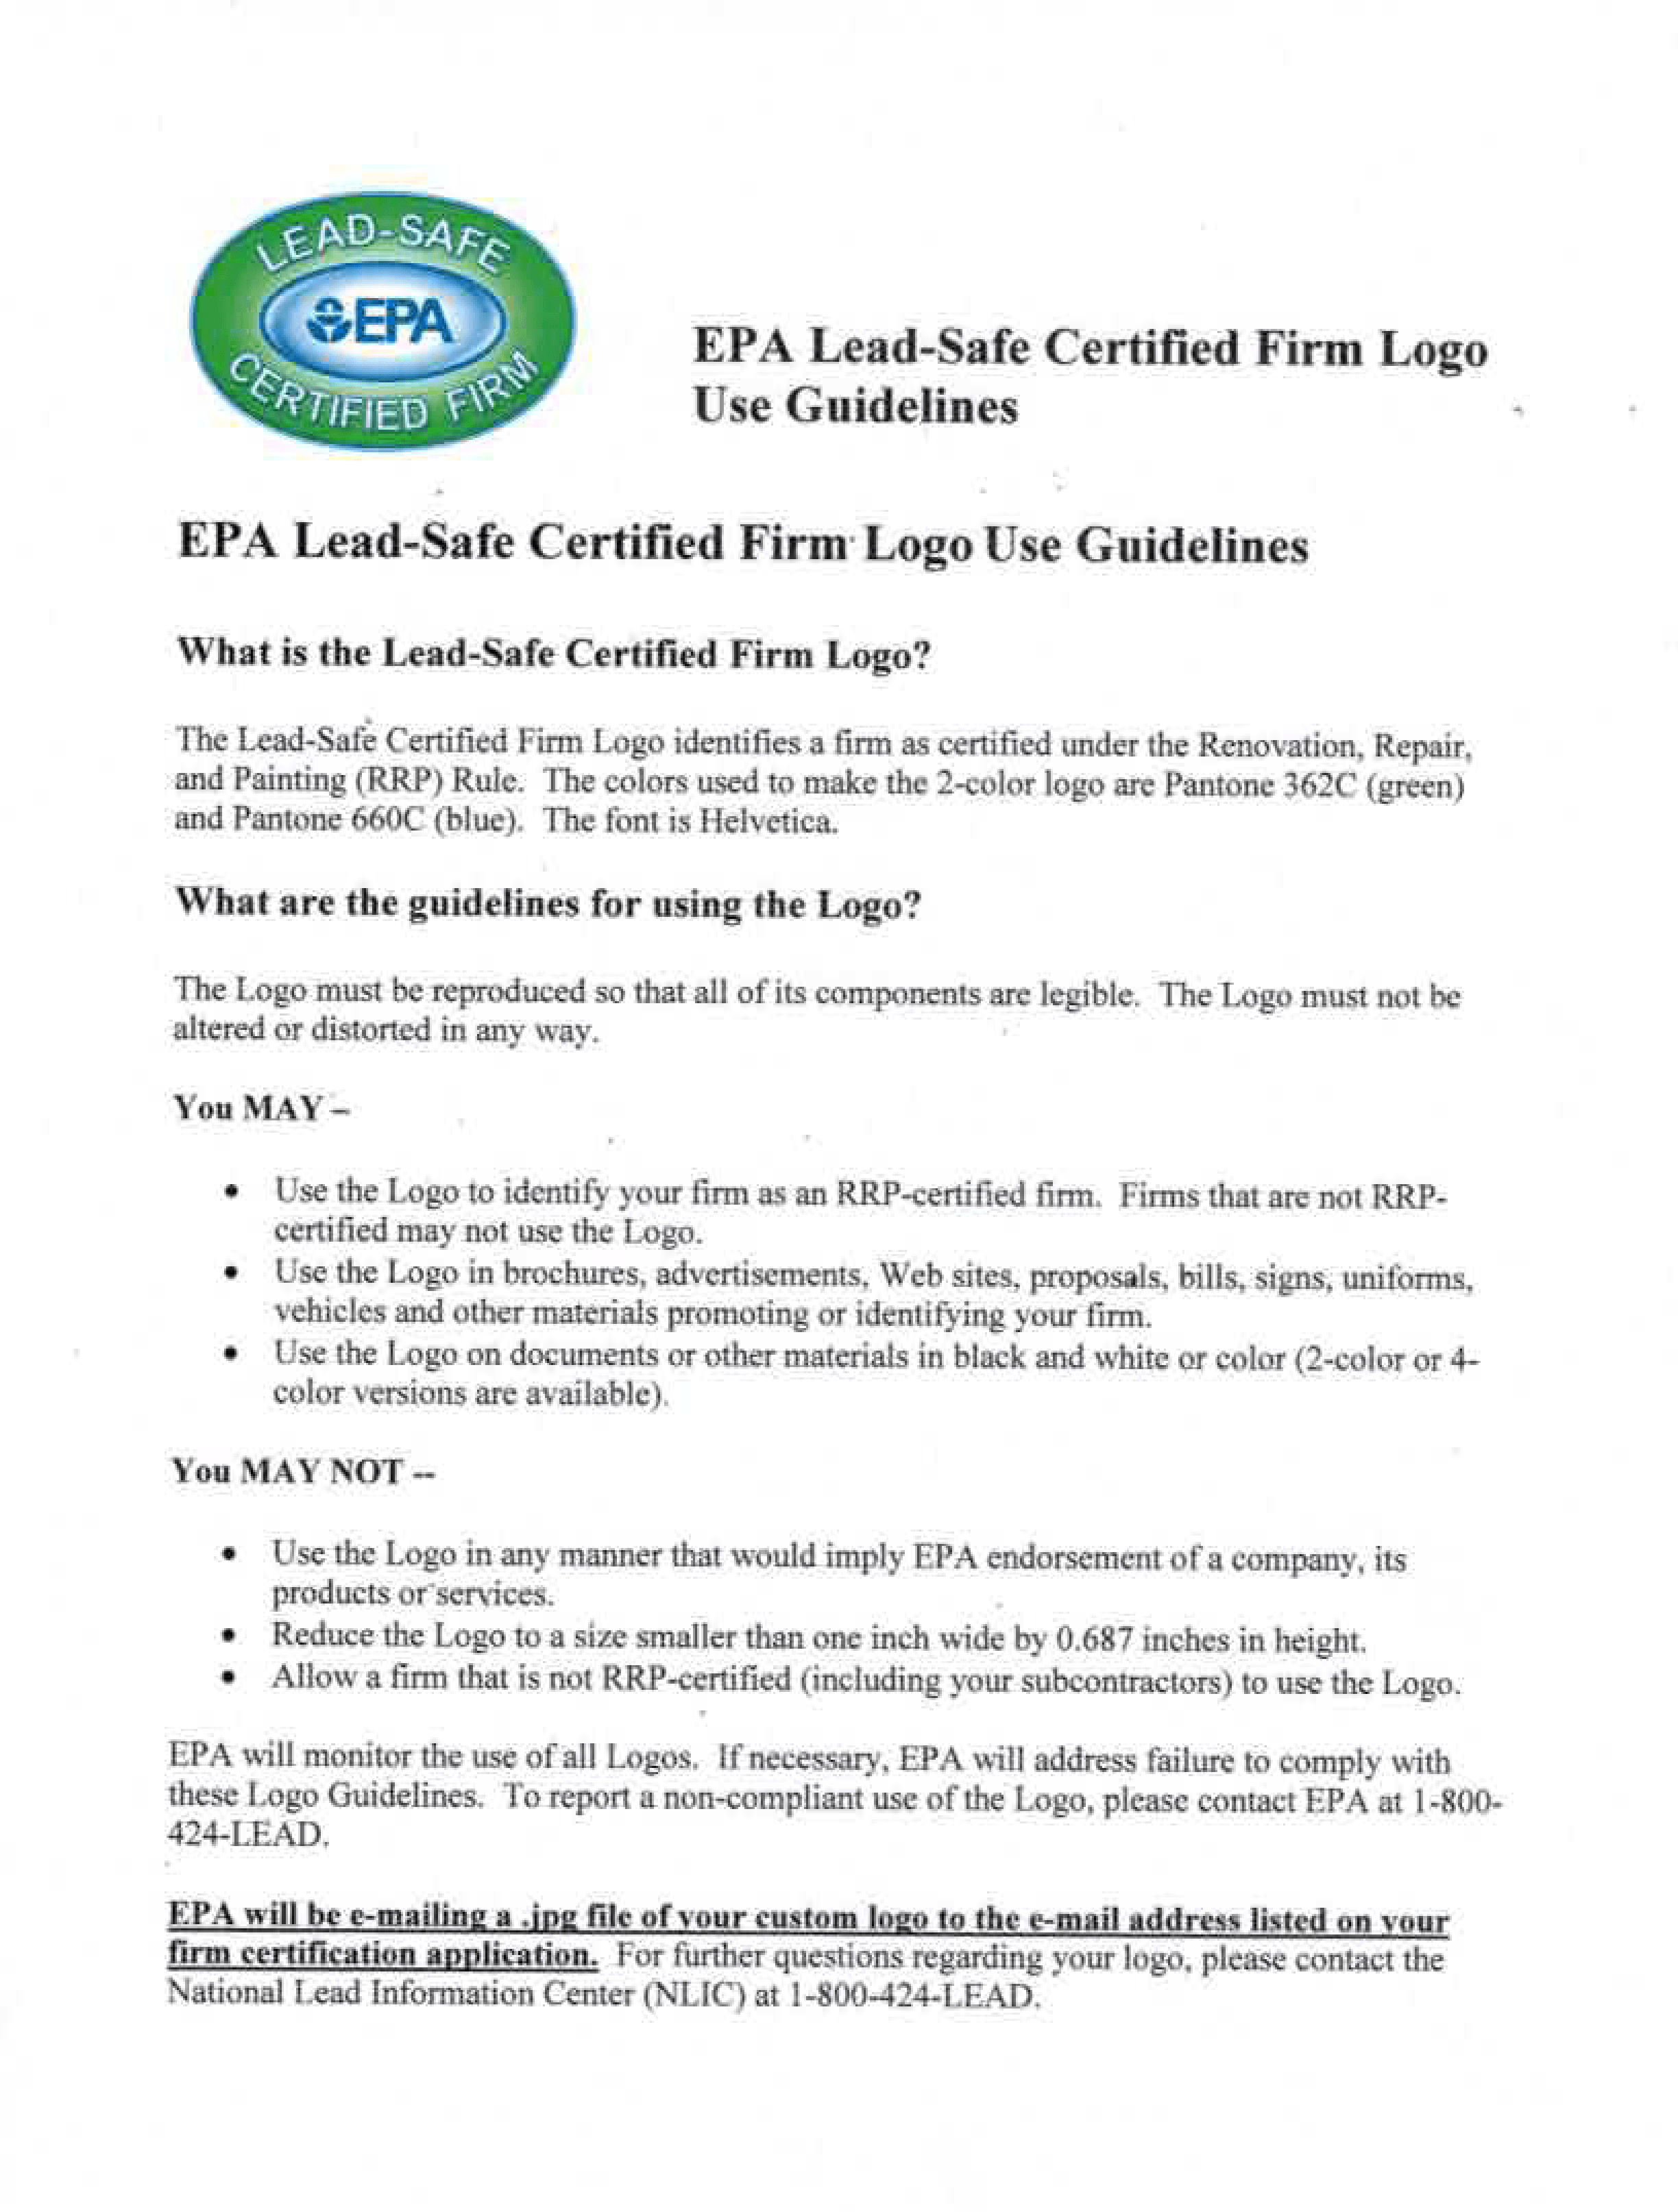 EPA Lead Safe Logo - EPA Lead Safe Cirtified's Roofing